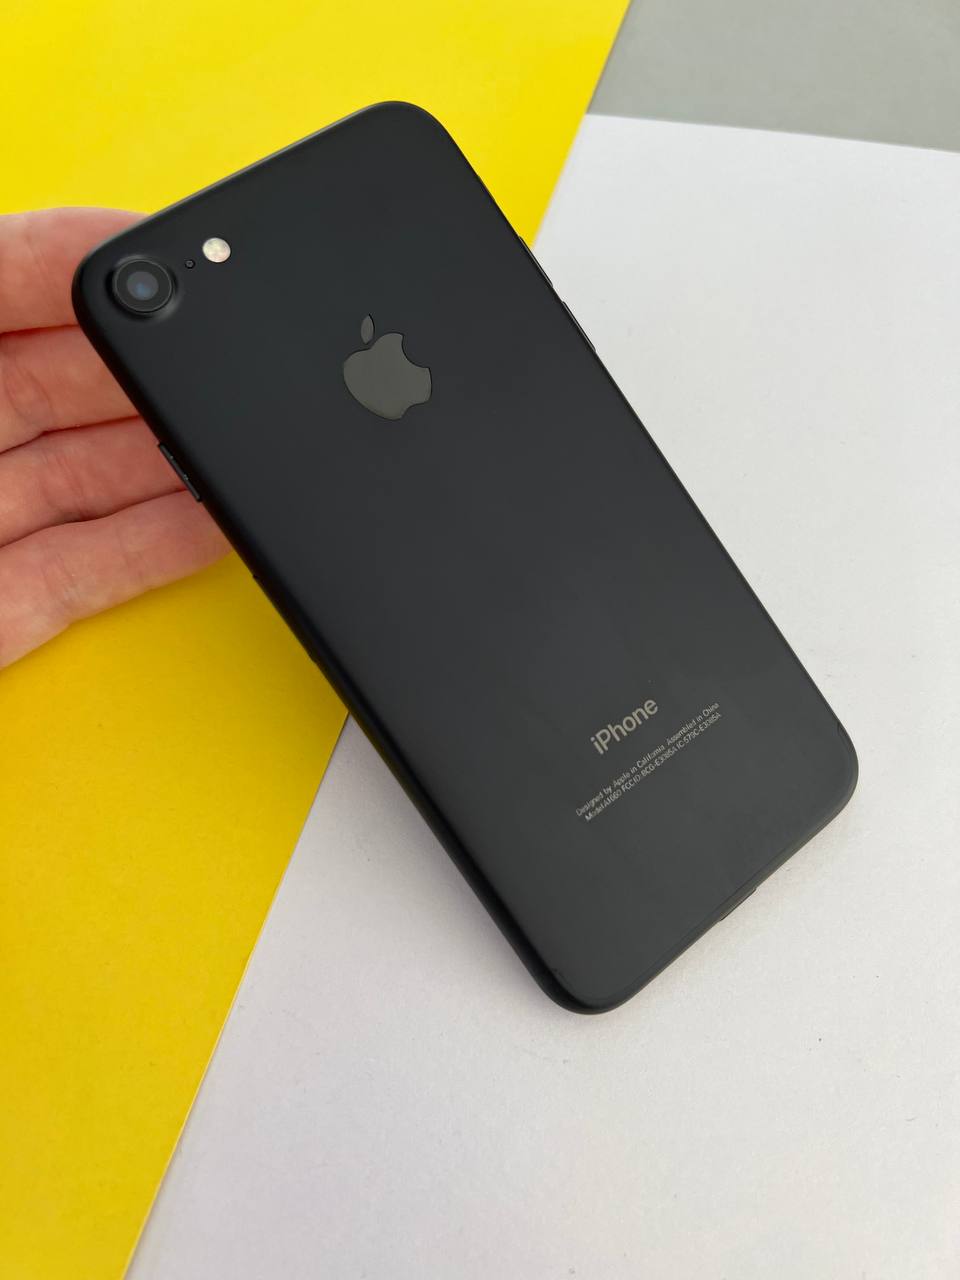 Apple iPhone 7 128gb Black